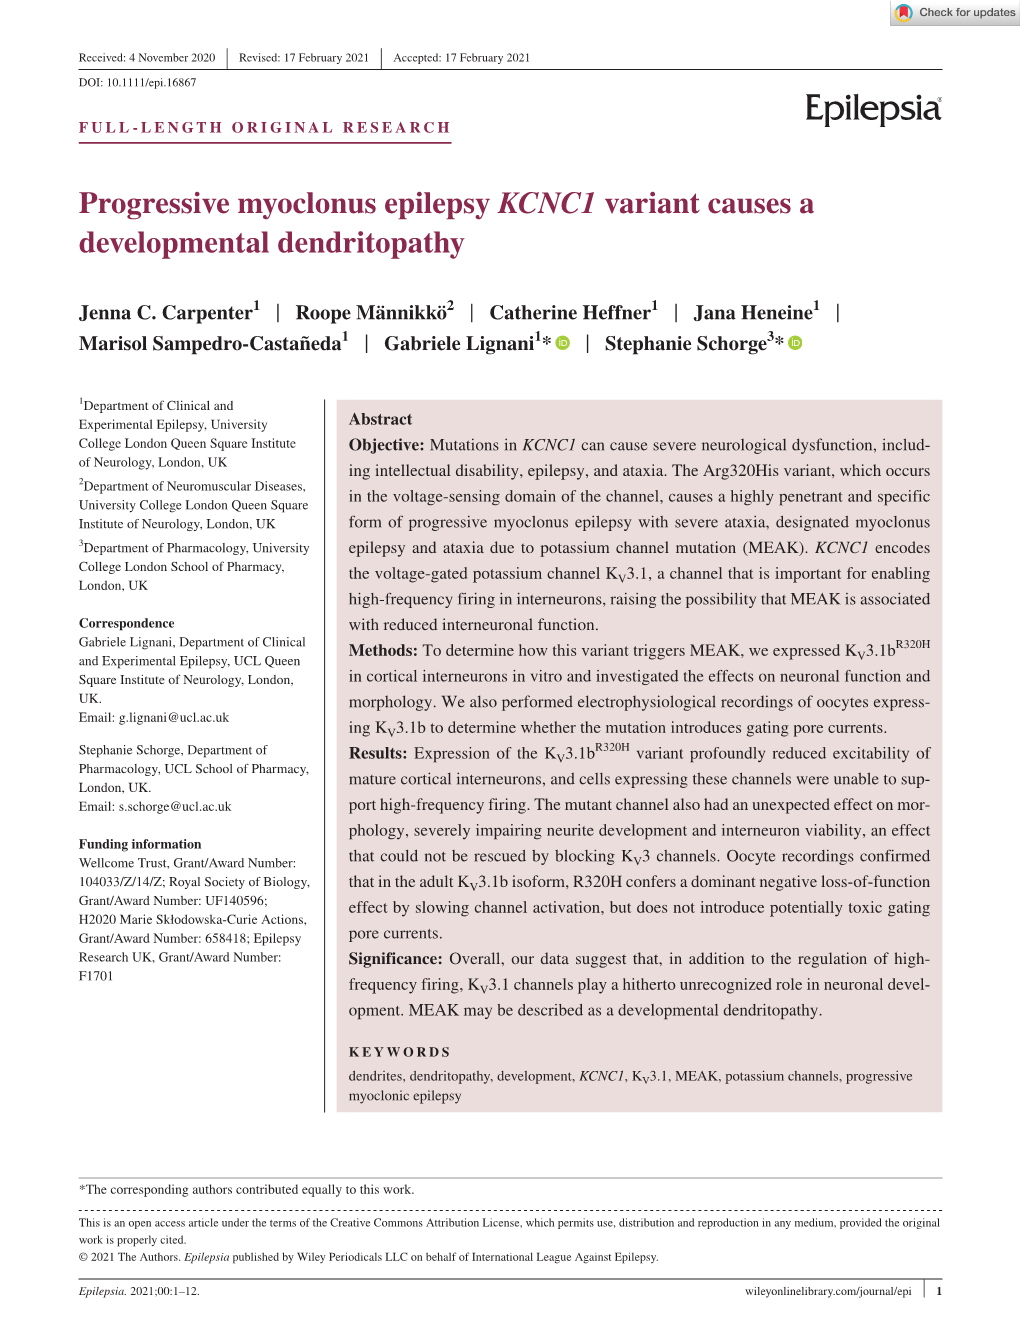 Progressive Myoclonus Epilepsy KCNC1 Variant Causes a Developmental Dendritopathy